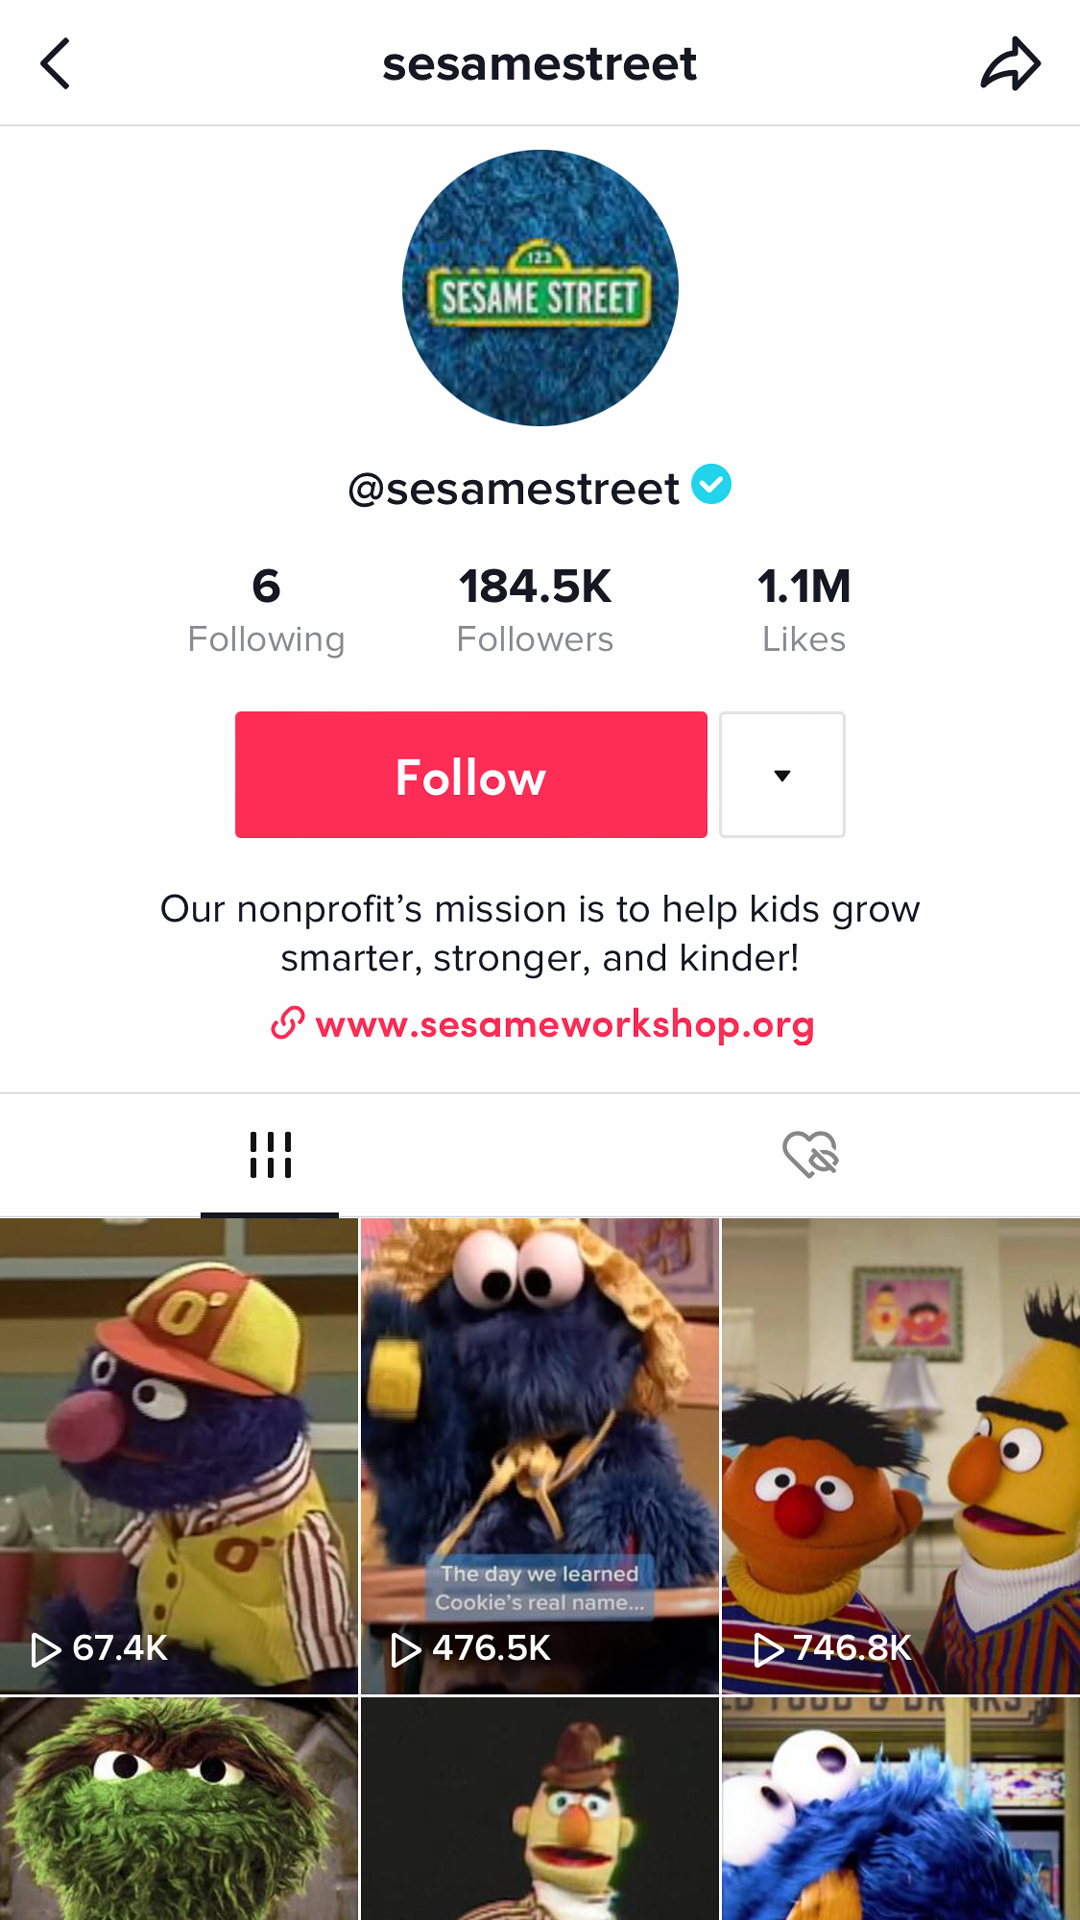 Sesame Street (@sesamestreet) • Instagram photos and videos